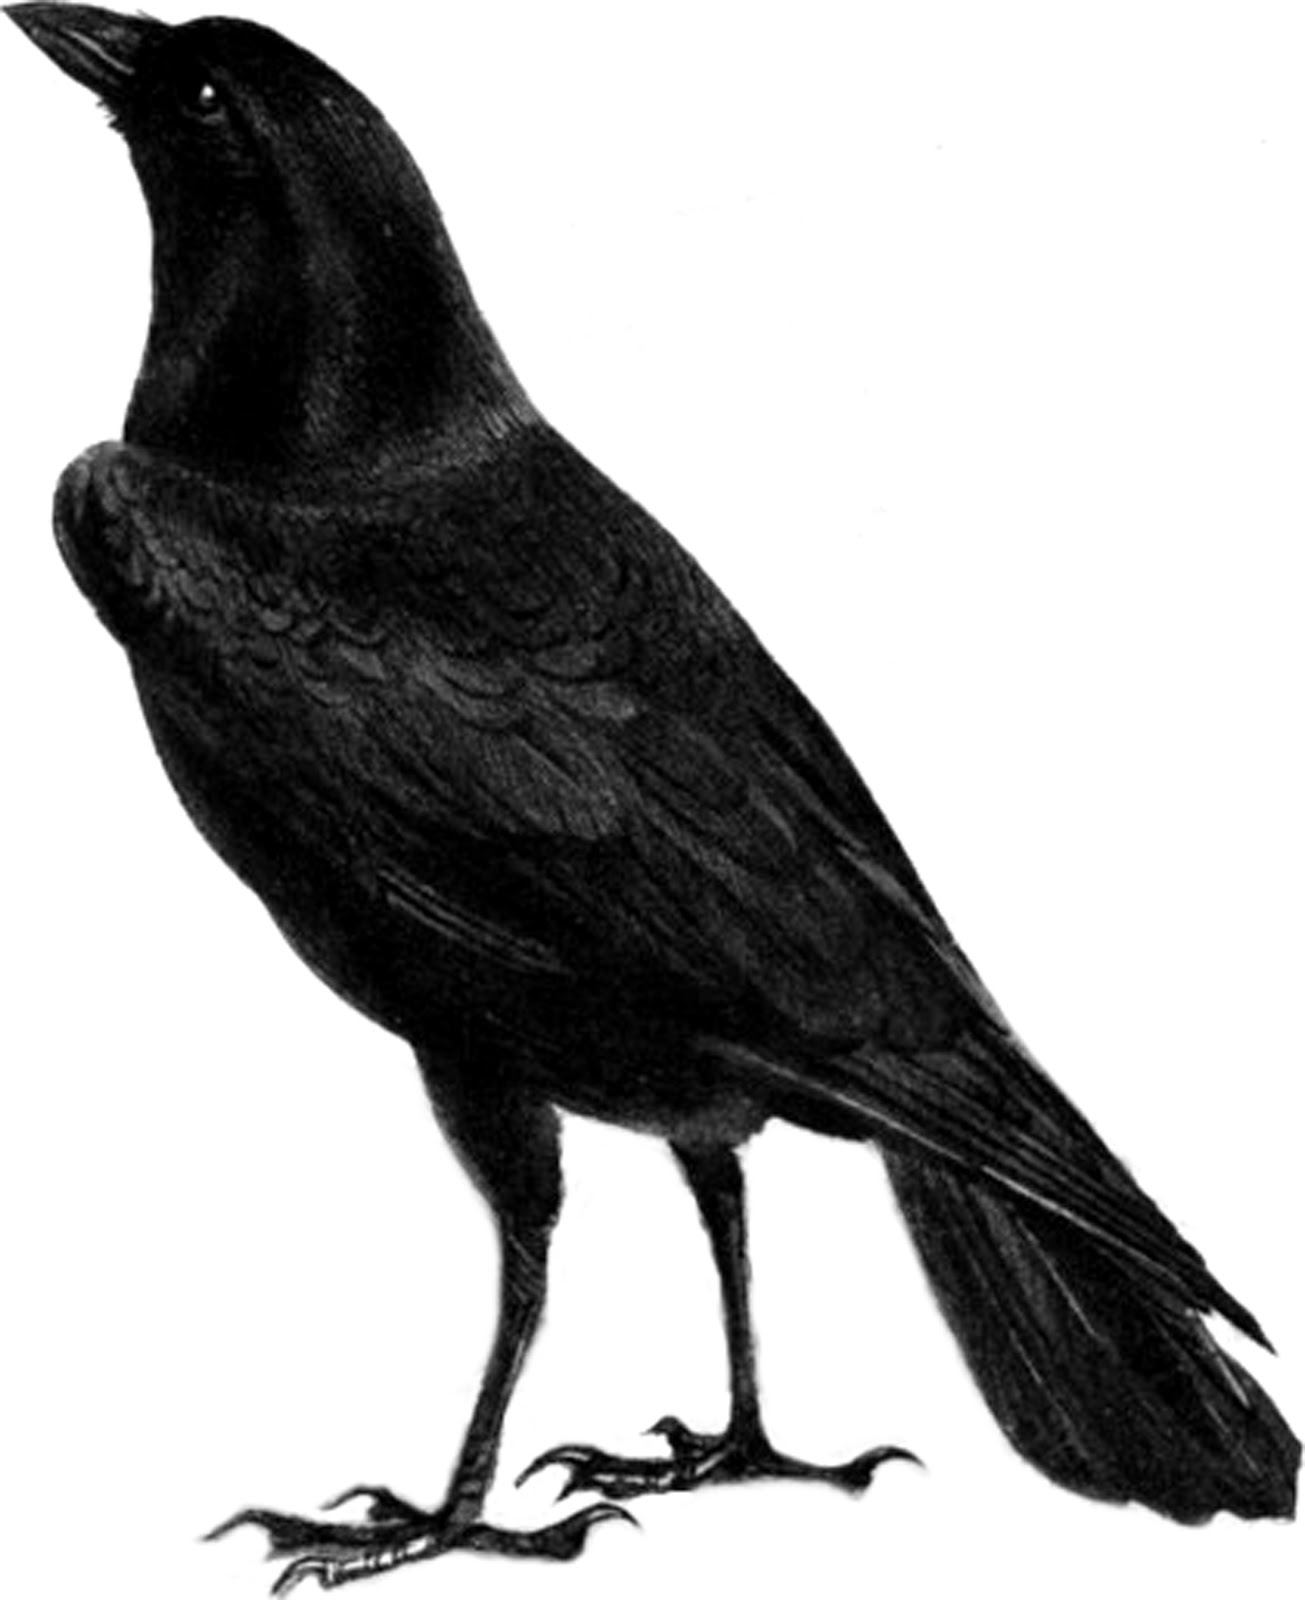 [Botões] Fundo castanho - Médio - Texto claro    2176+JPG+Black+Crow+Raven